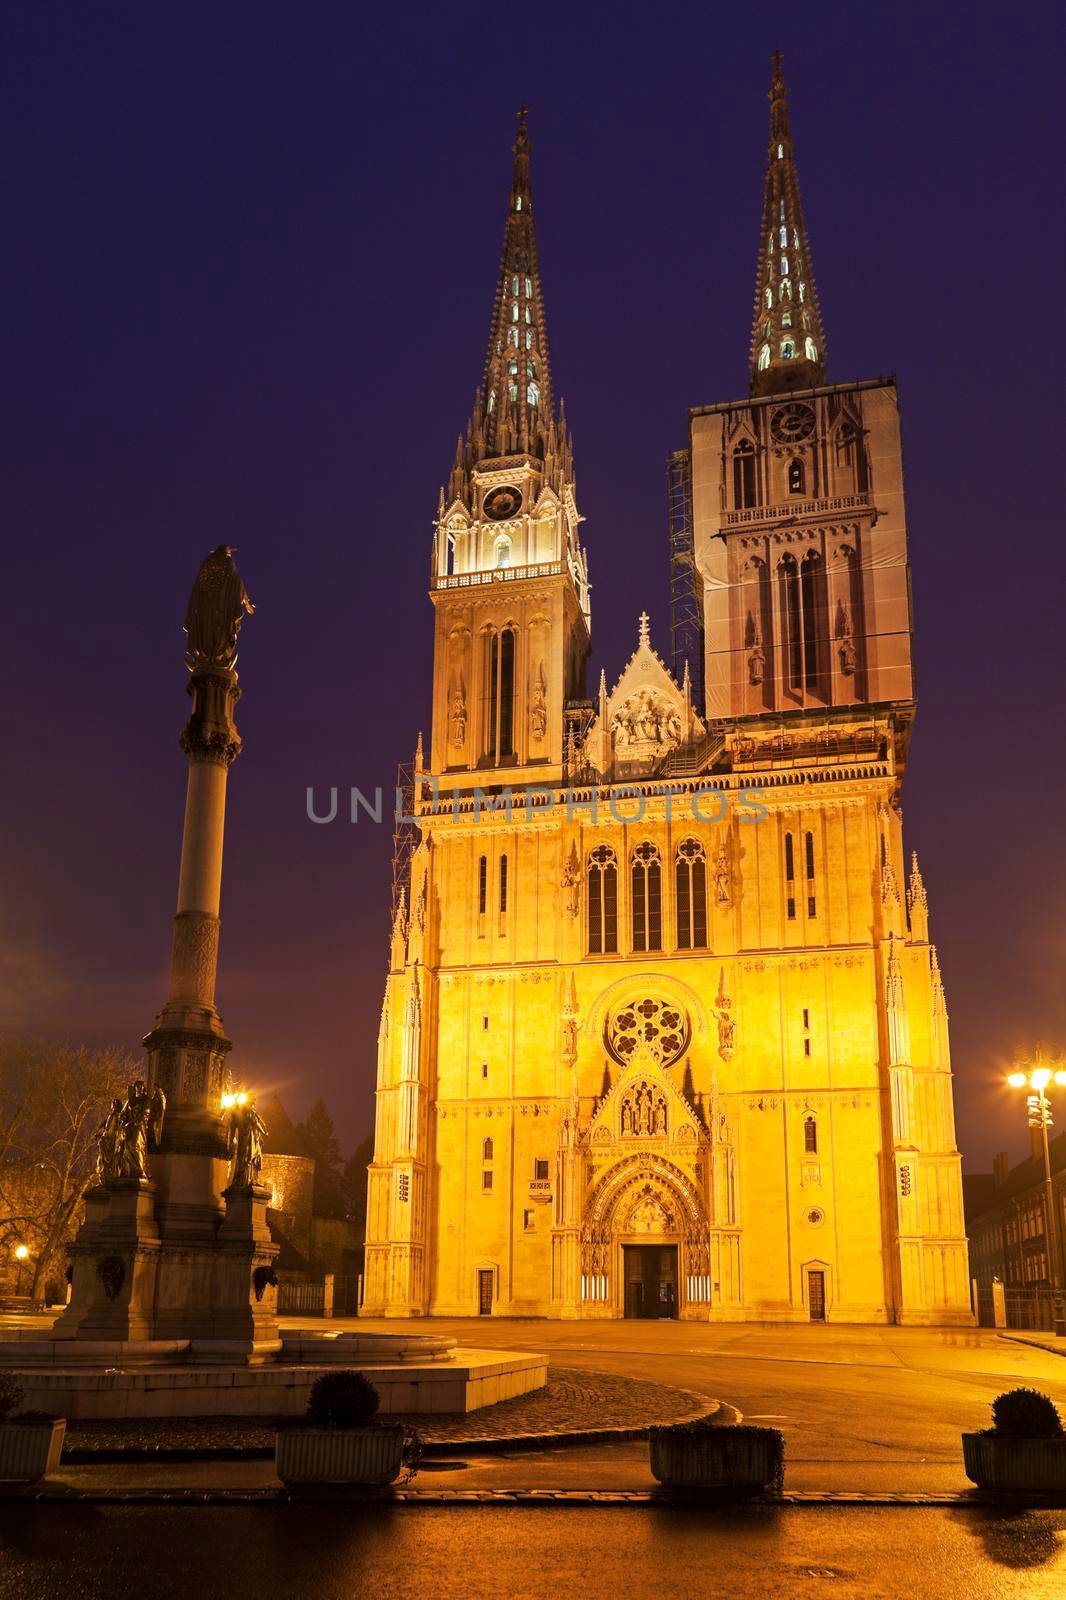 Zagreb Cathedral on Kaptol square at night. Zagreb, Croatia